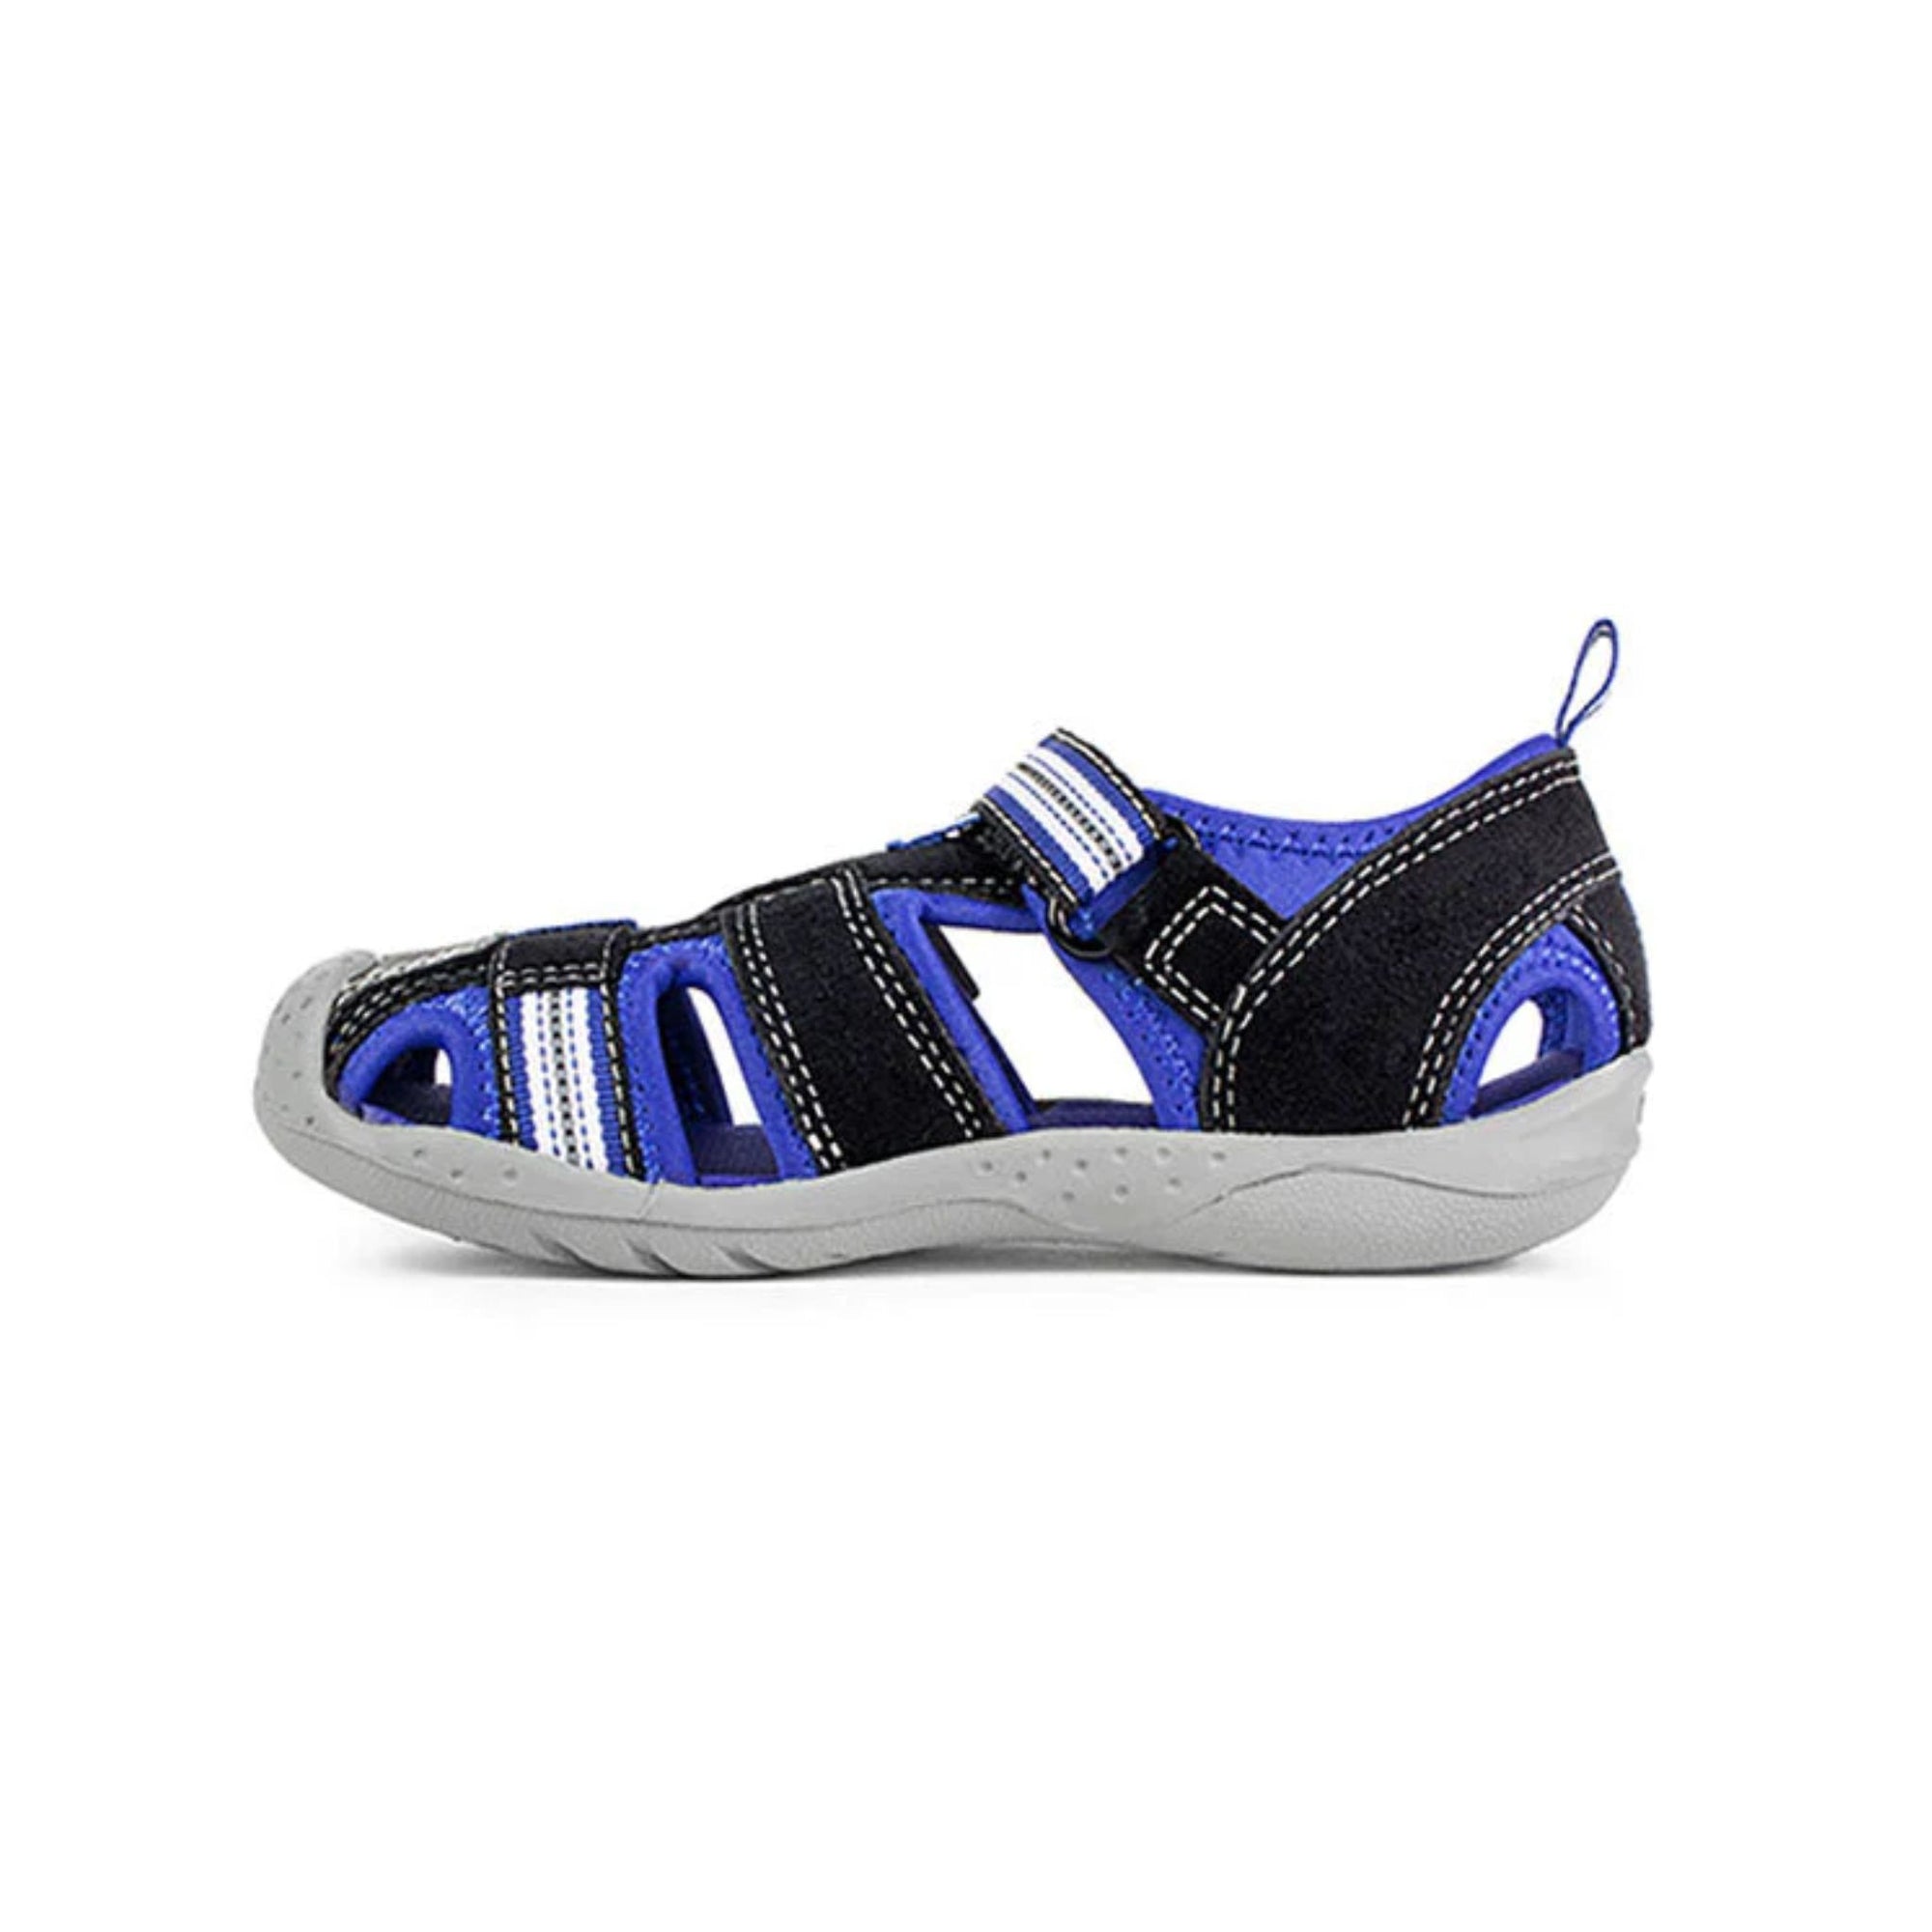 Pediped Flex Sahara Black / King Blue Adventure Sandals